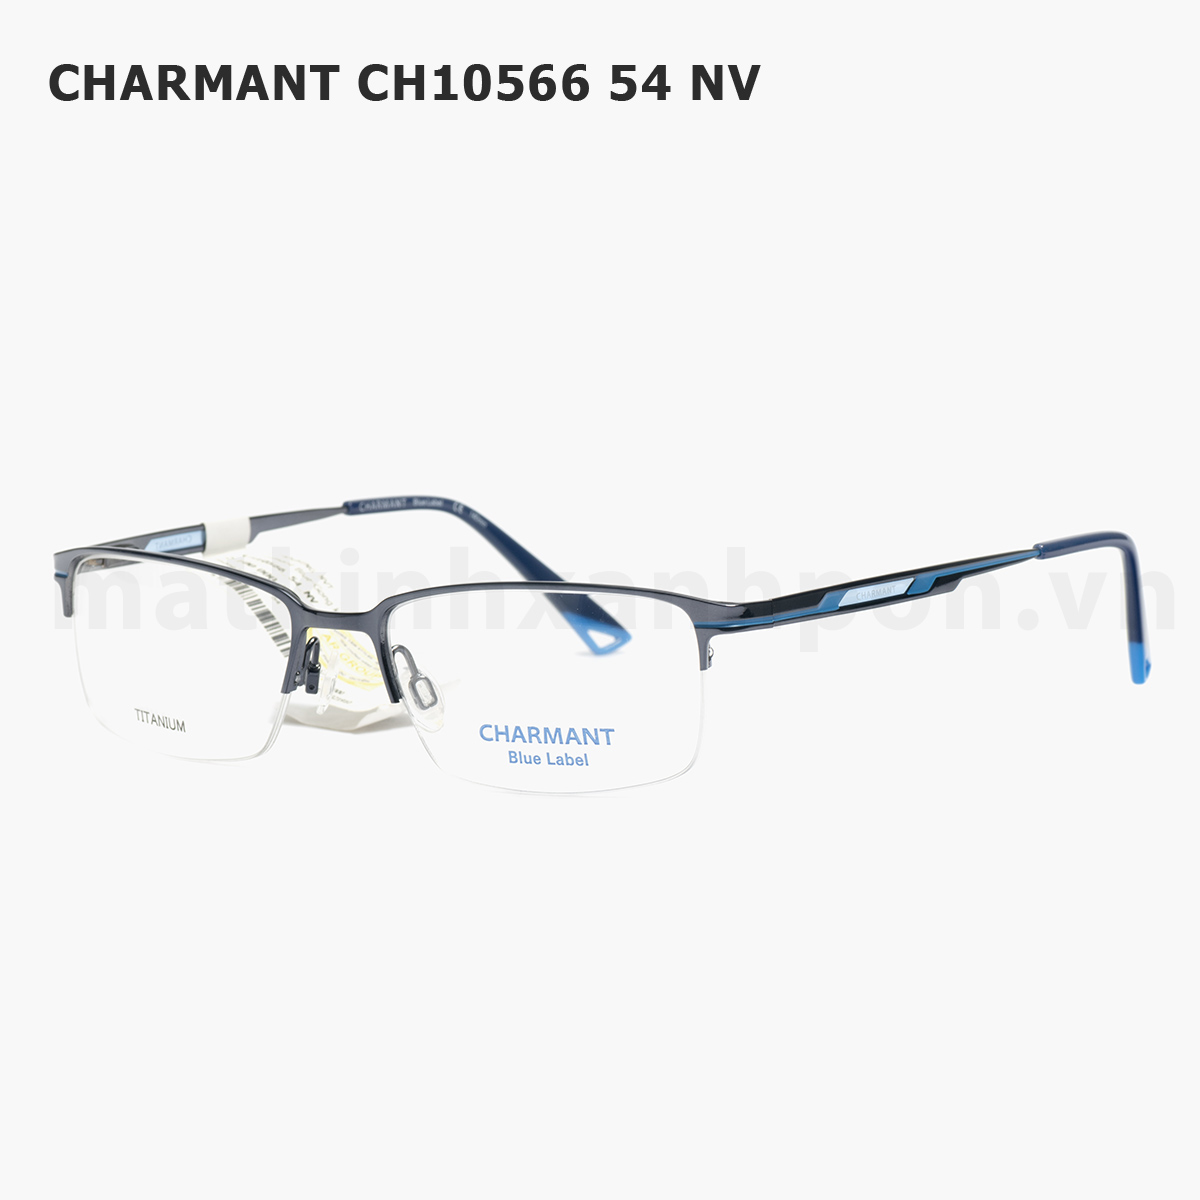 Charmant CH10566 54 NV